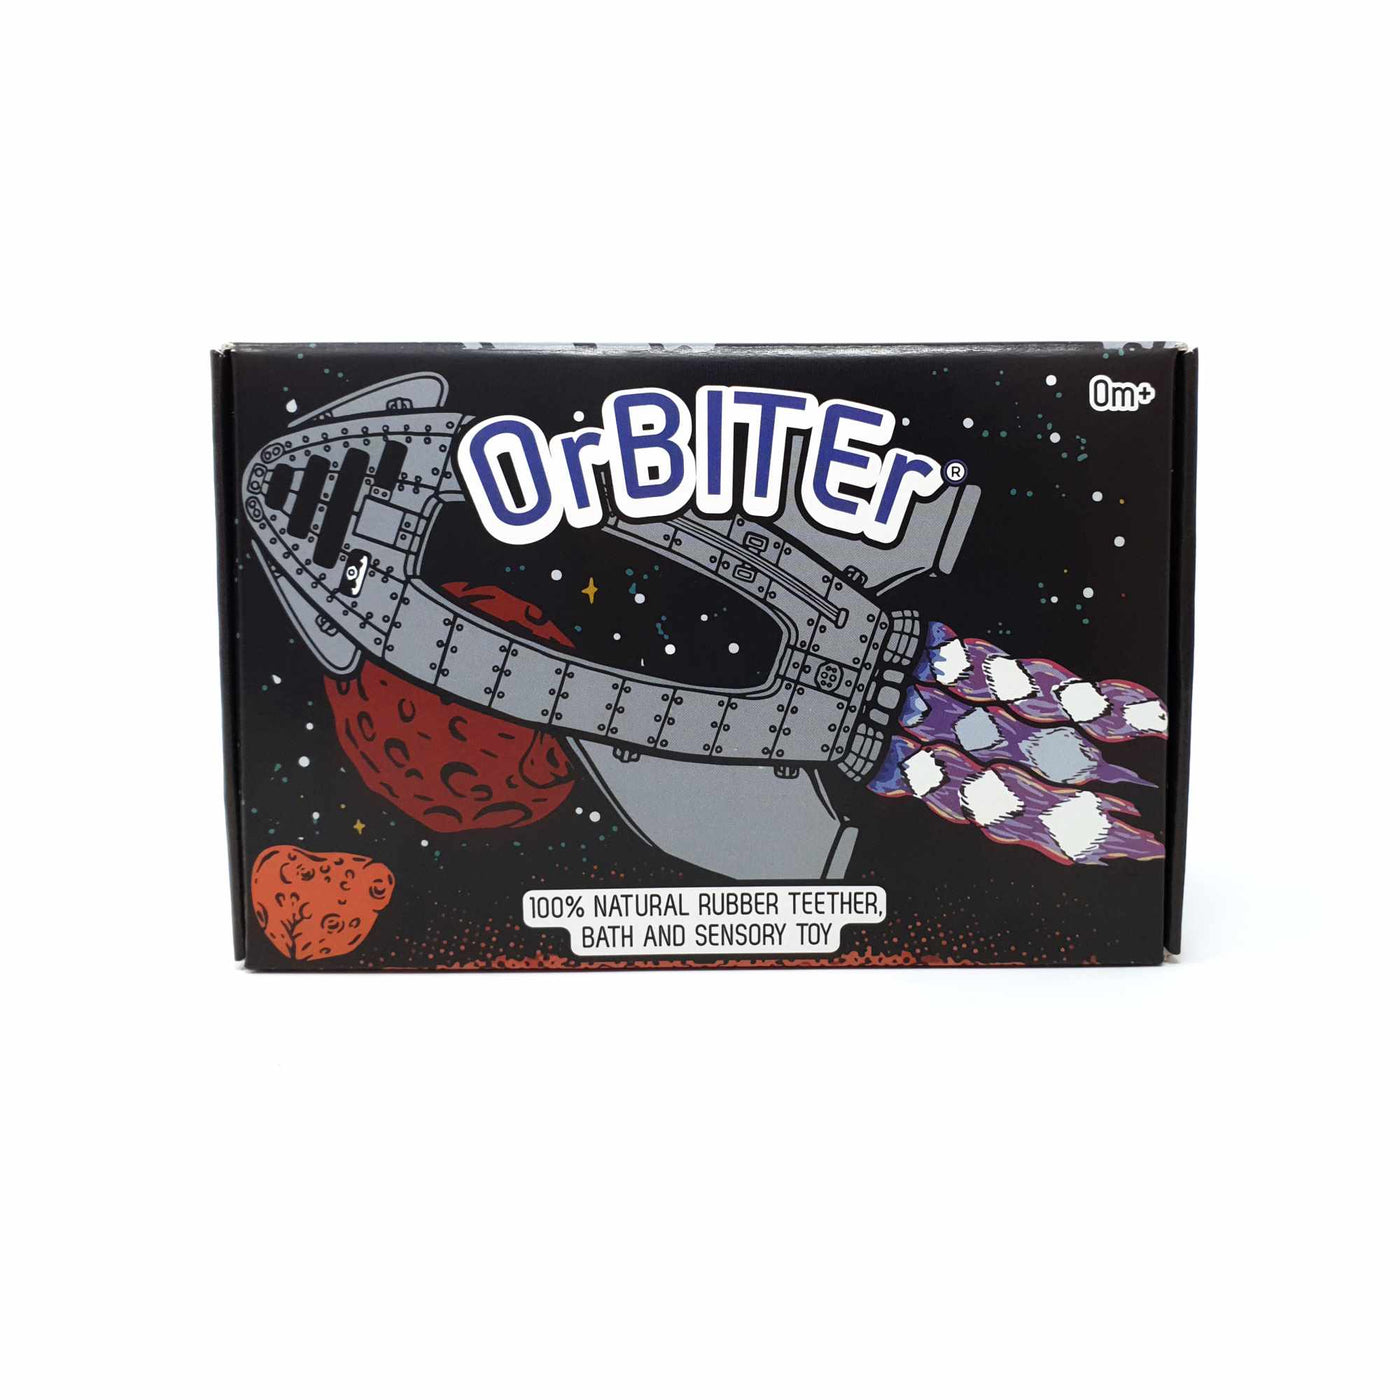 OrBITEr rocket shaped toy box packaging